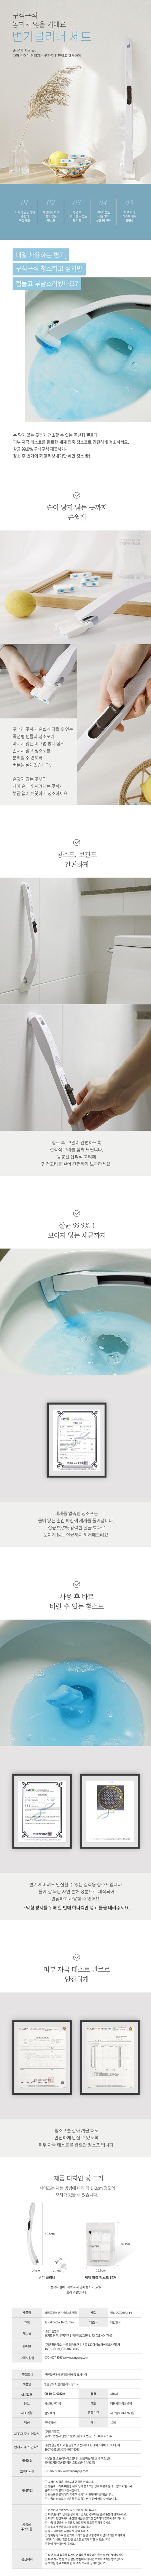 toilet_cleaner_set_deatail.jpg